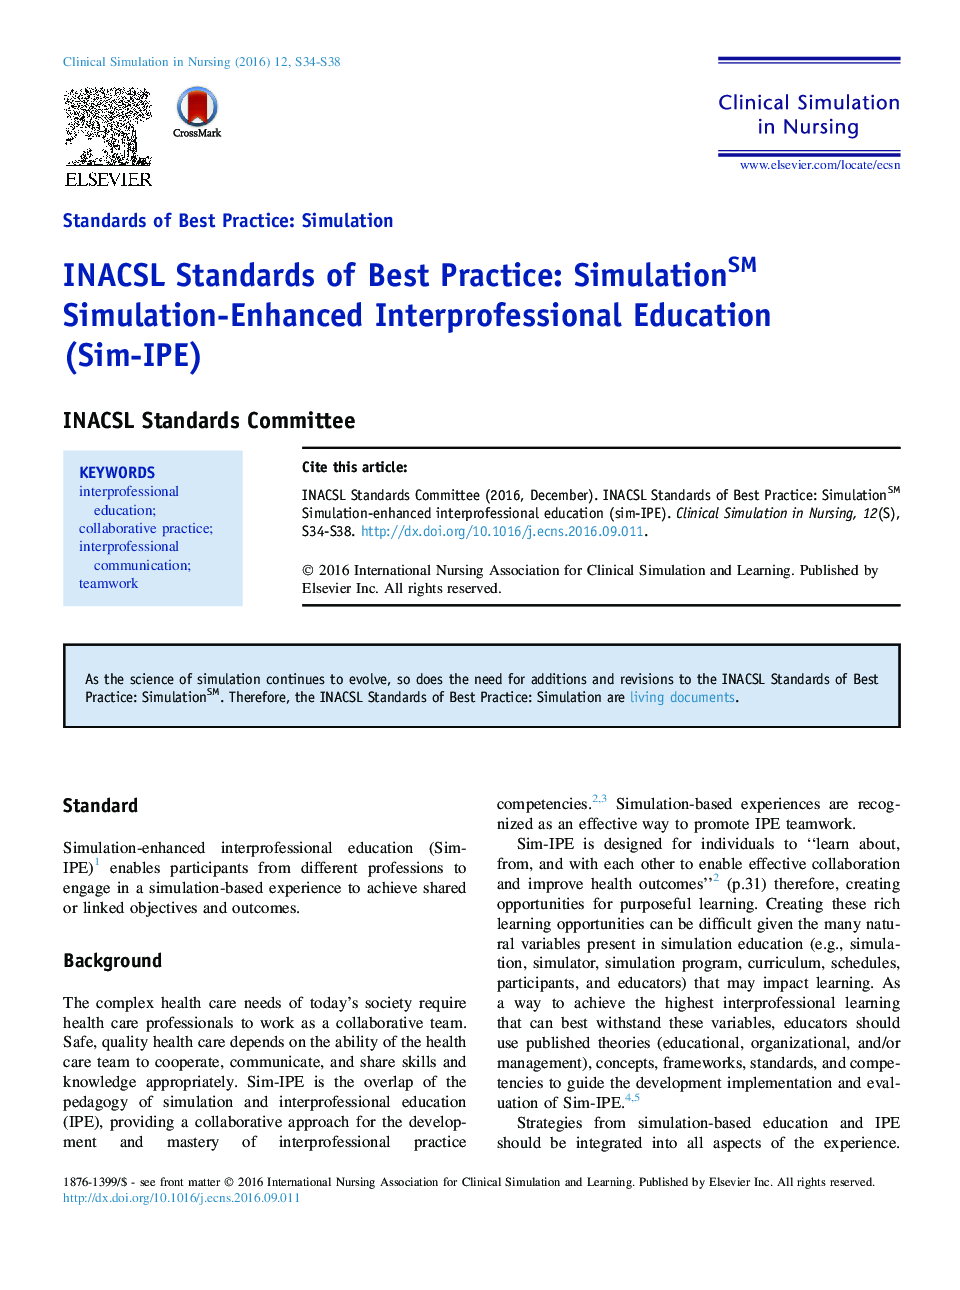 INACSL Standards of Best Practice: SimulationSM Simulation-Enhanced Interprofessional Education (Sim-IPE)